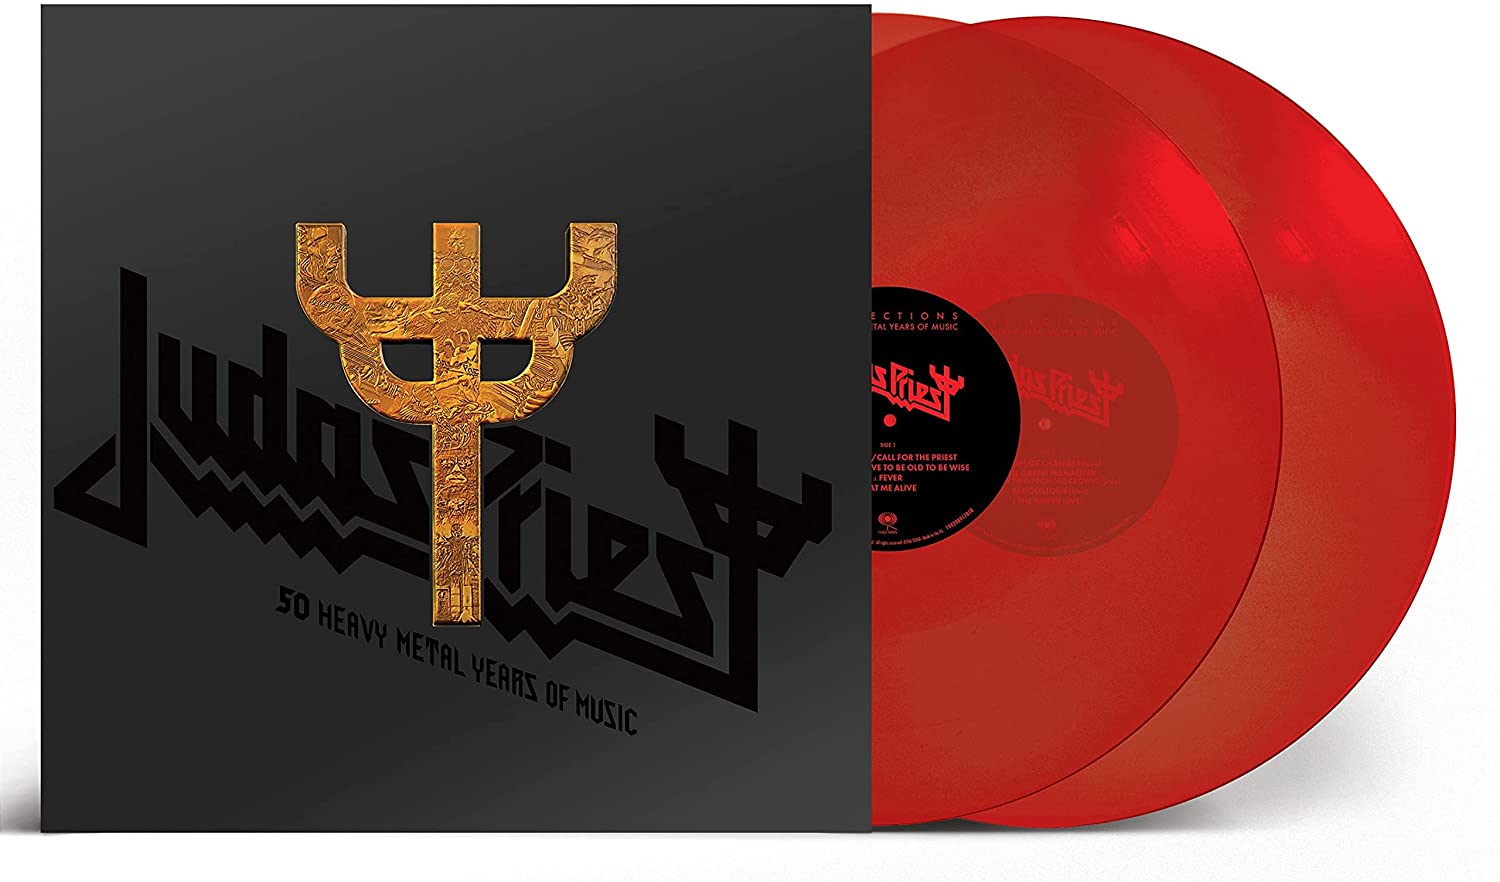 Judas Priest "Reflections - 50 Heavy Metal Years Of Music" Red Vinyl